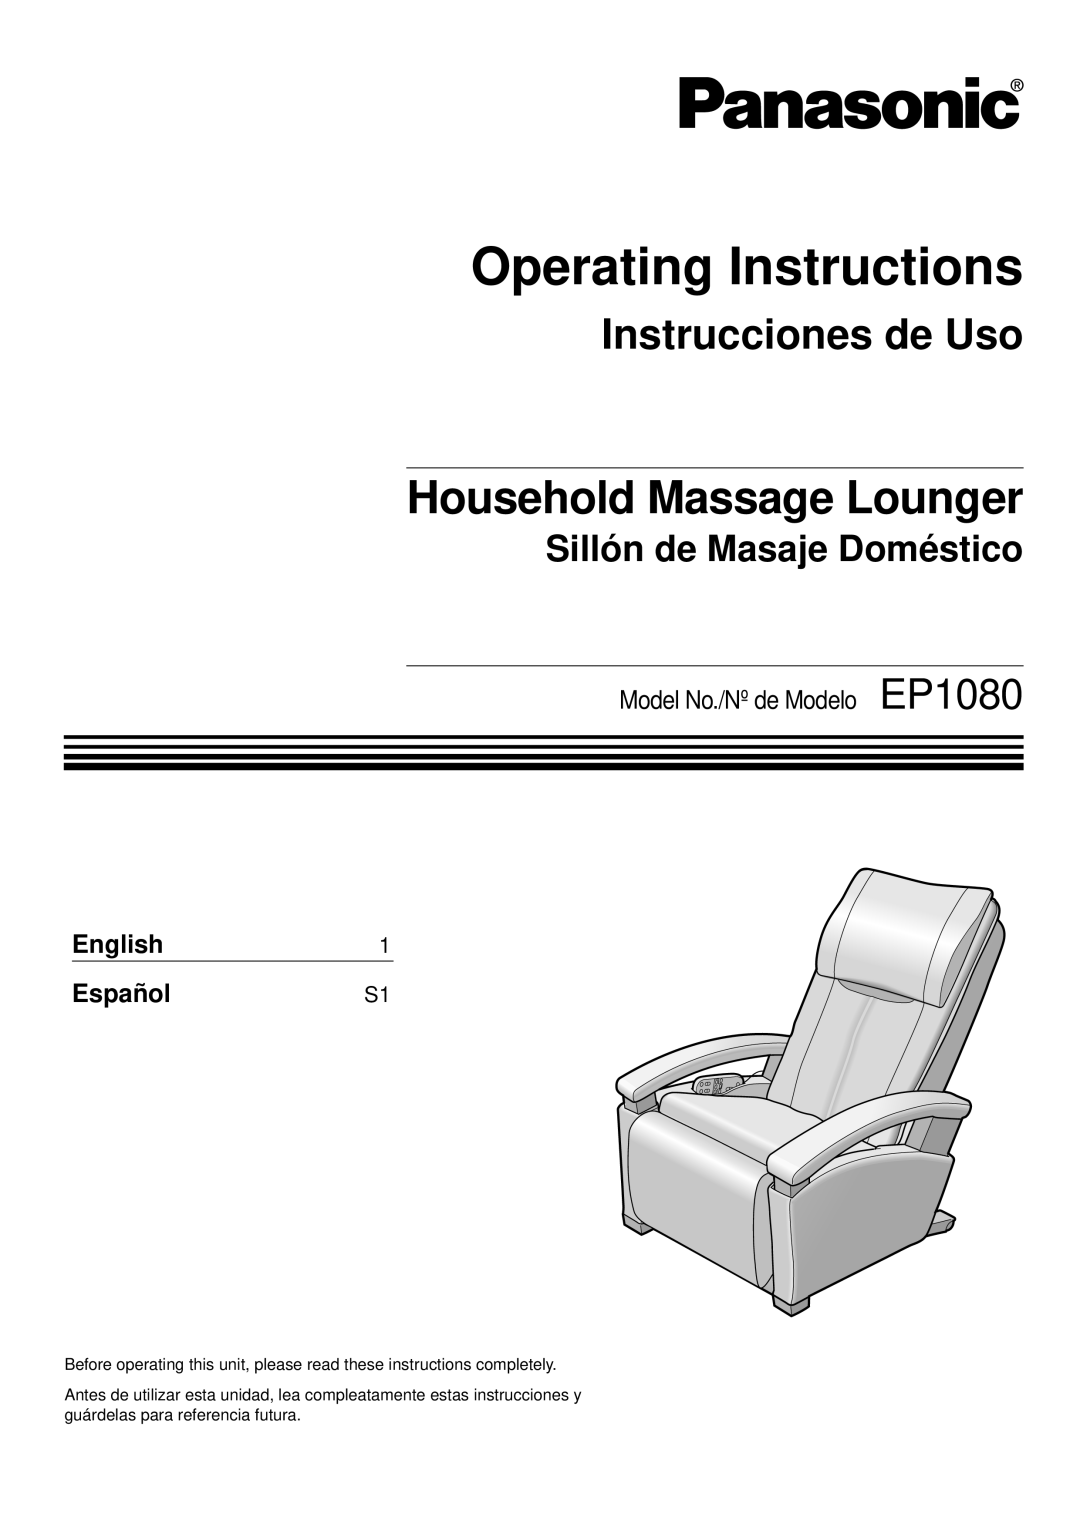 Panasonic EP1080 manual English1, Operating Instructions, Household Massage Lounger, Instrucciones de Uso, EspañolS1 